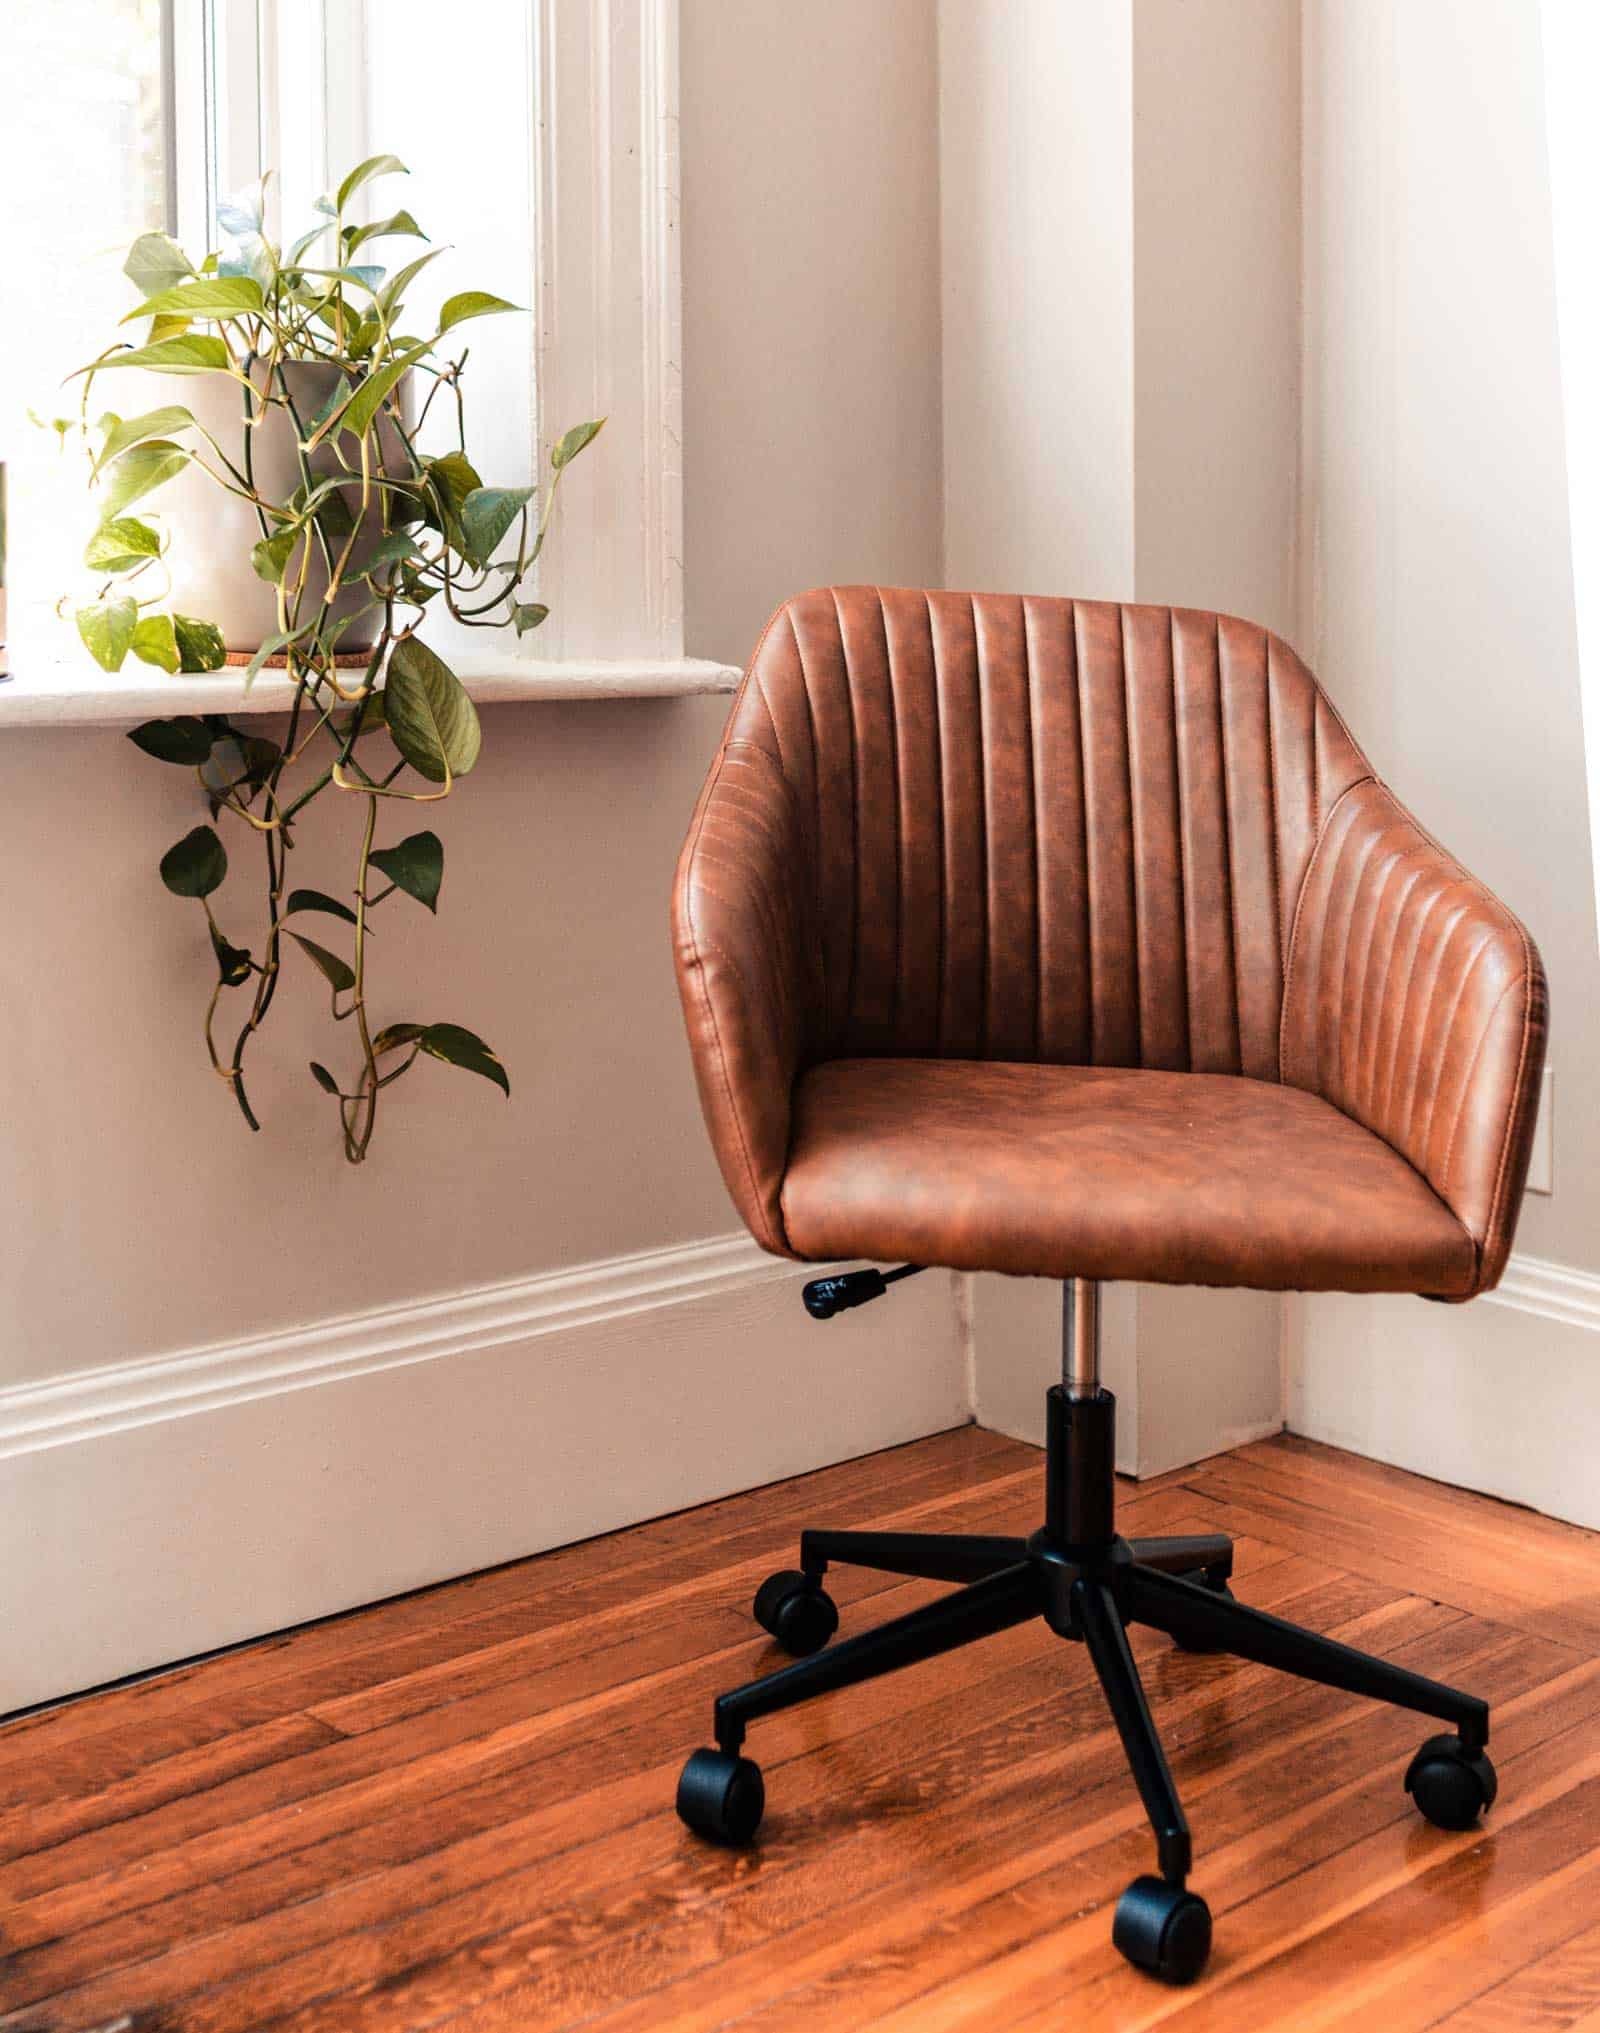 Do office chair wheels scratch hardwood floors?